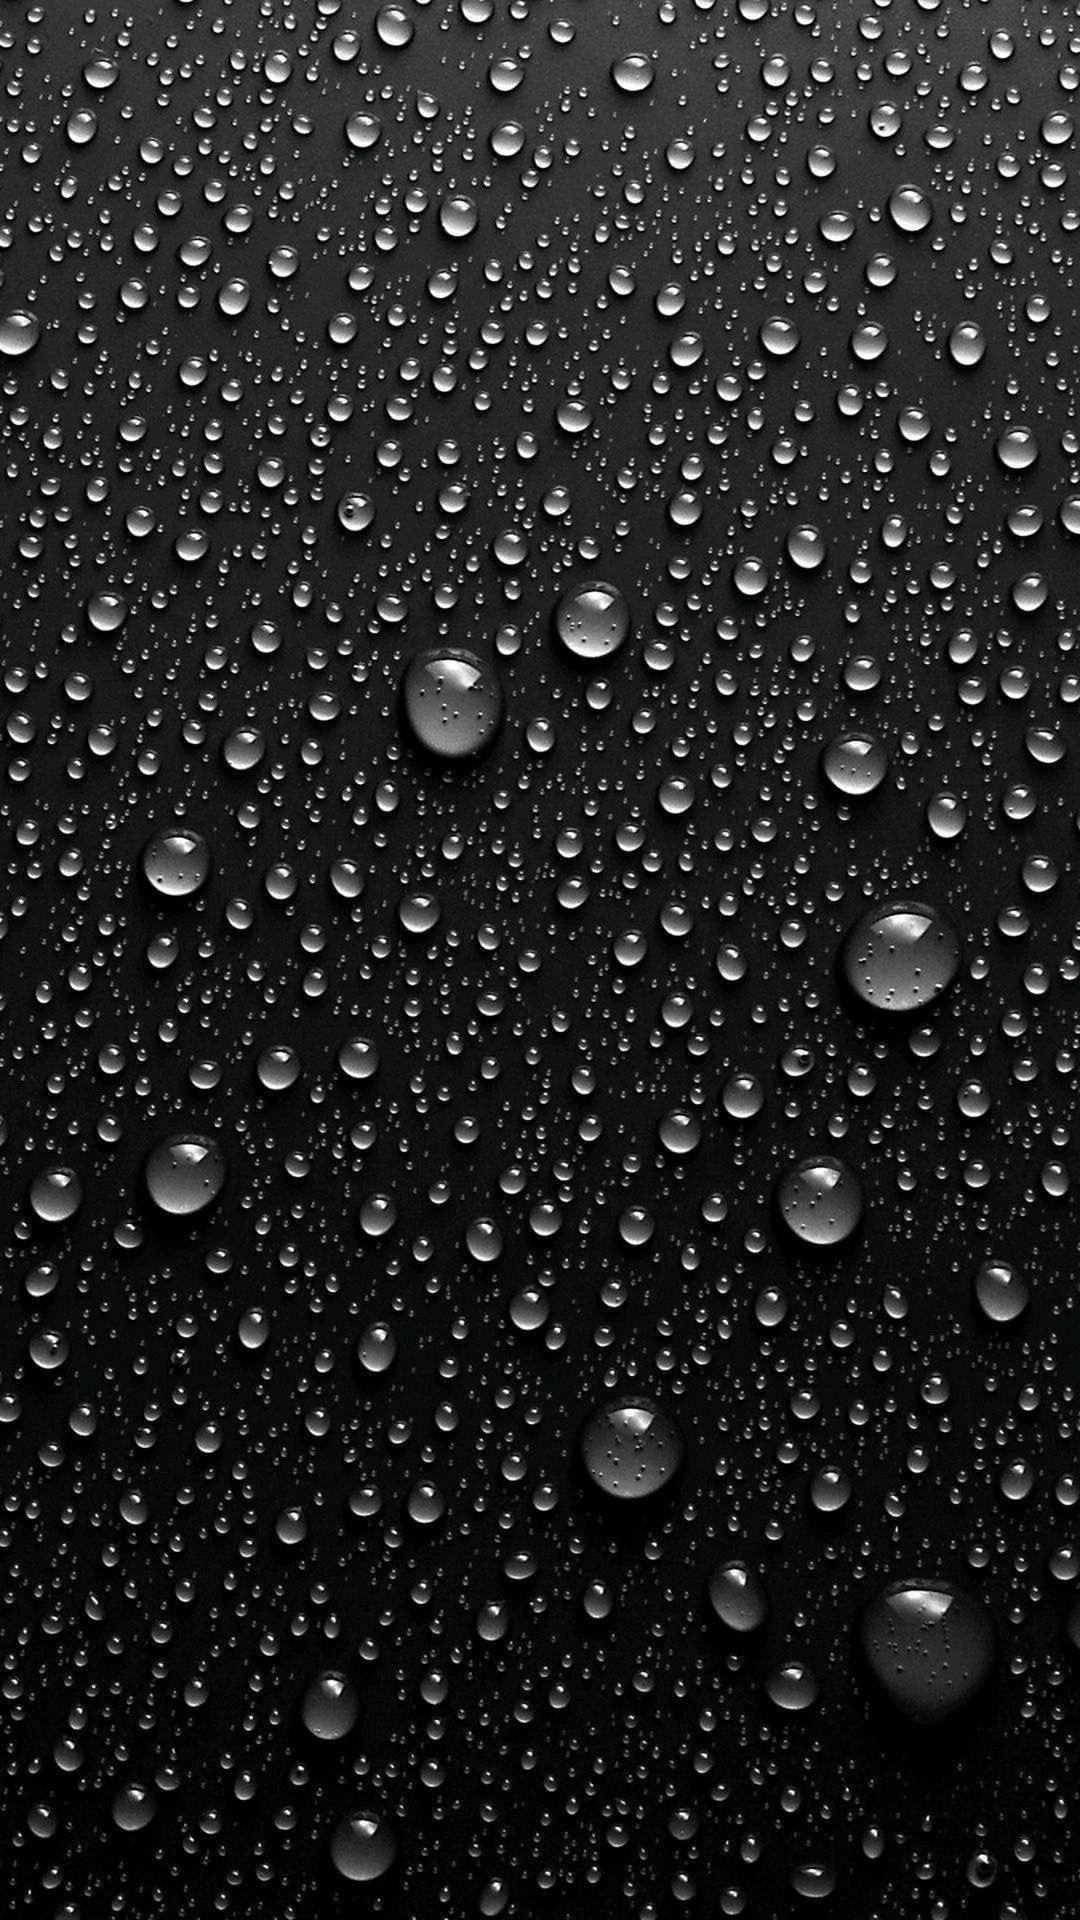 Black Iphone Droplets Background